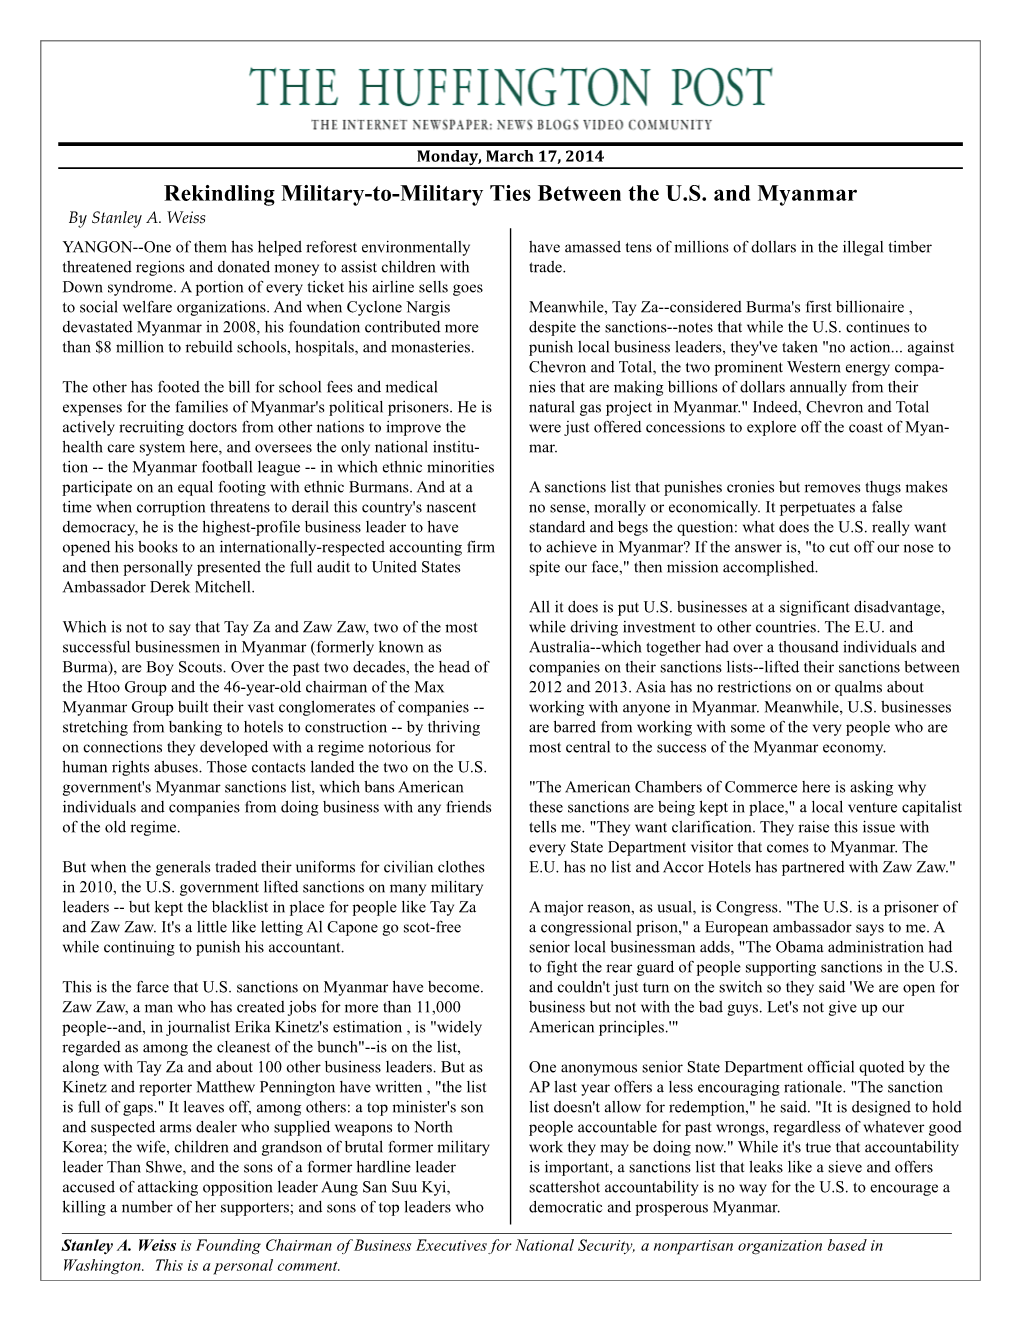 Rekindling Military-To-Military Ties Between the U.S. and Myanmar by Stanley A